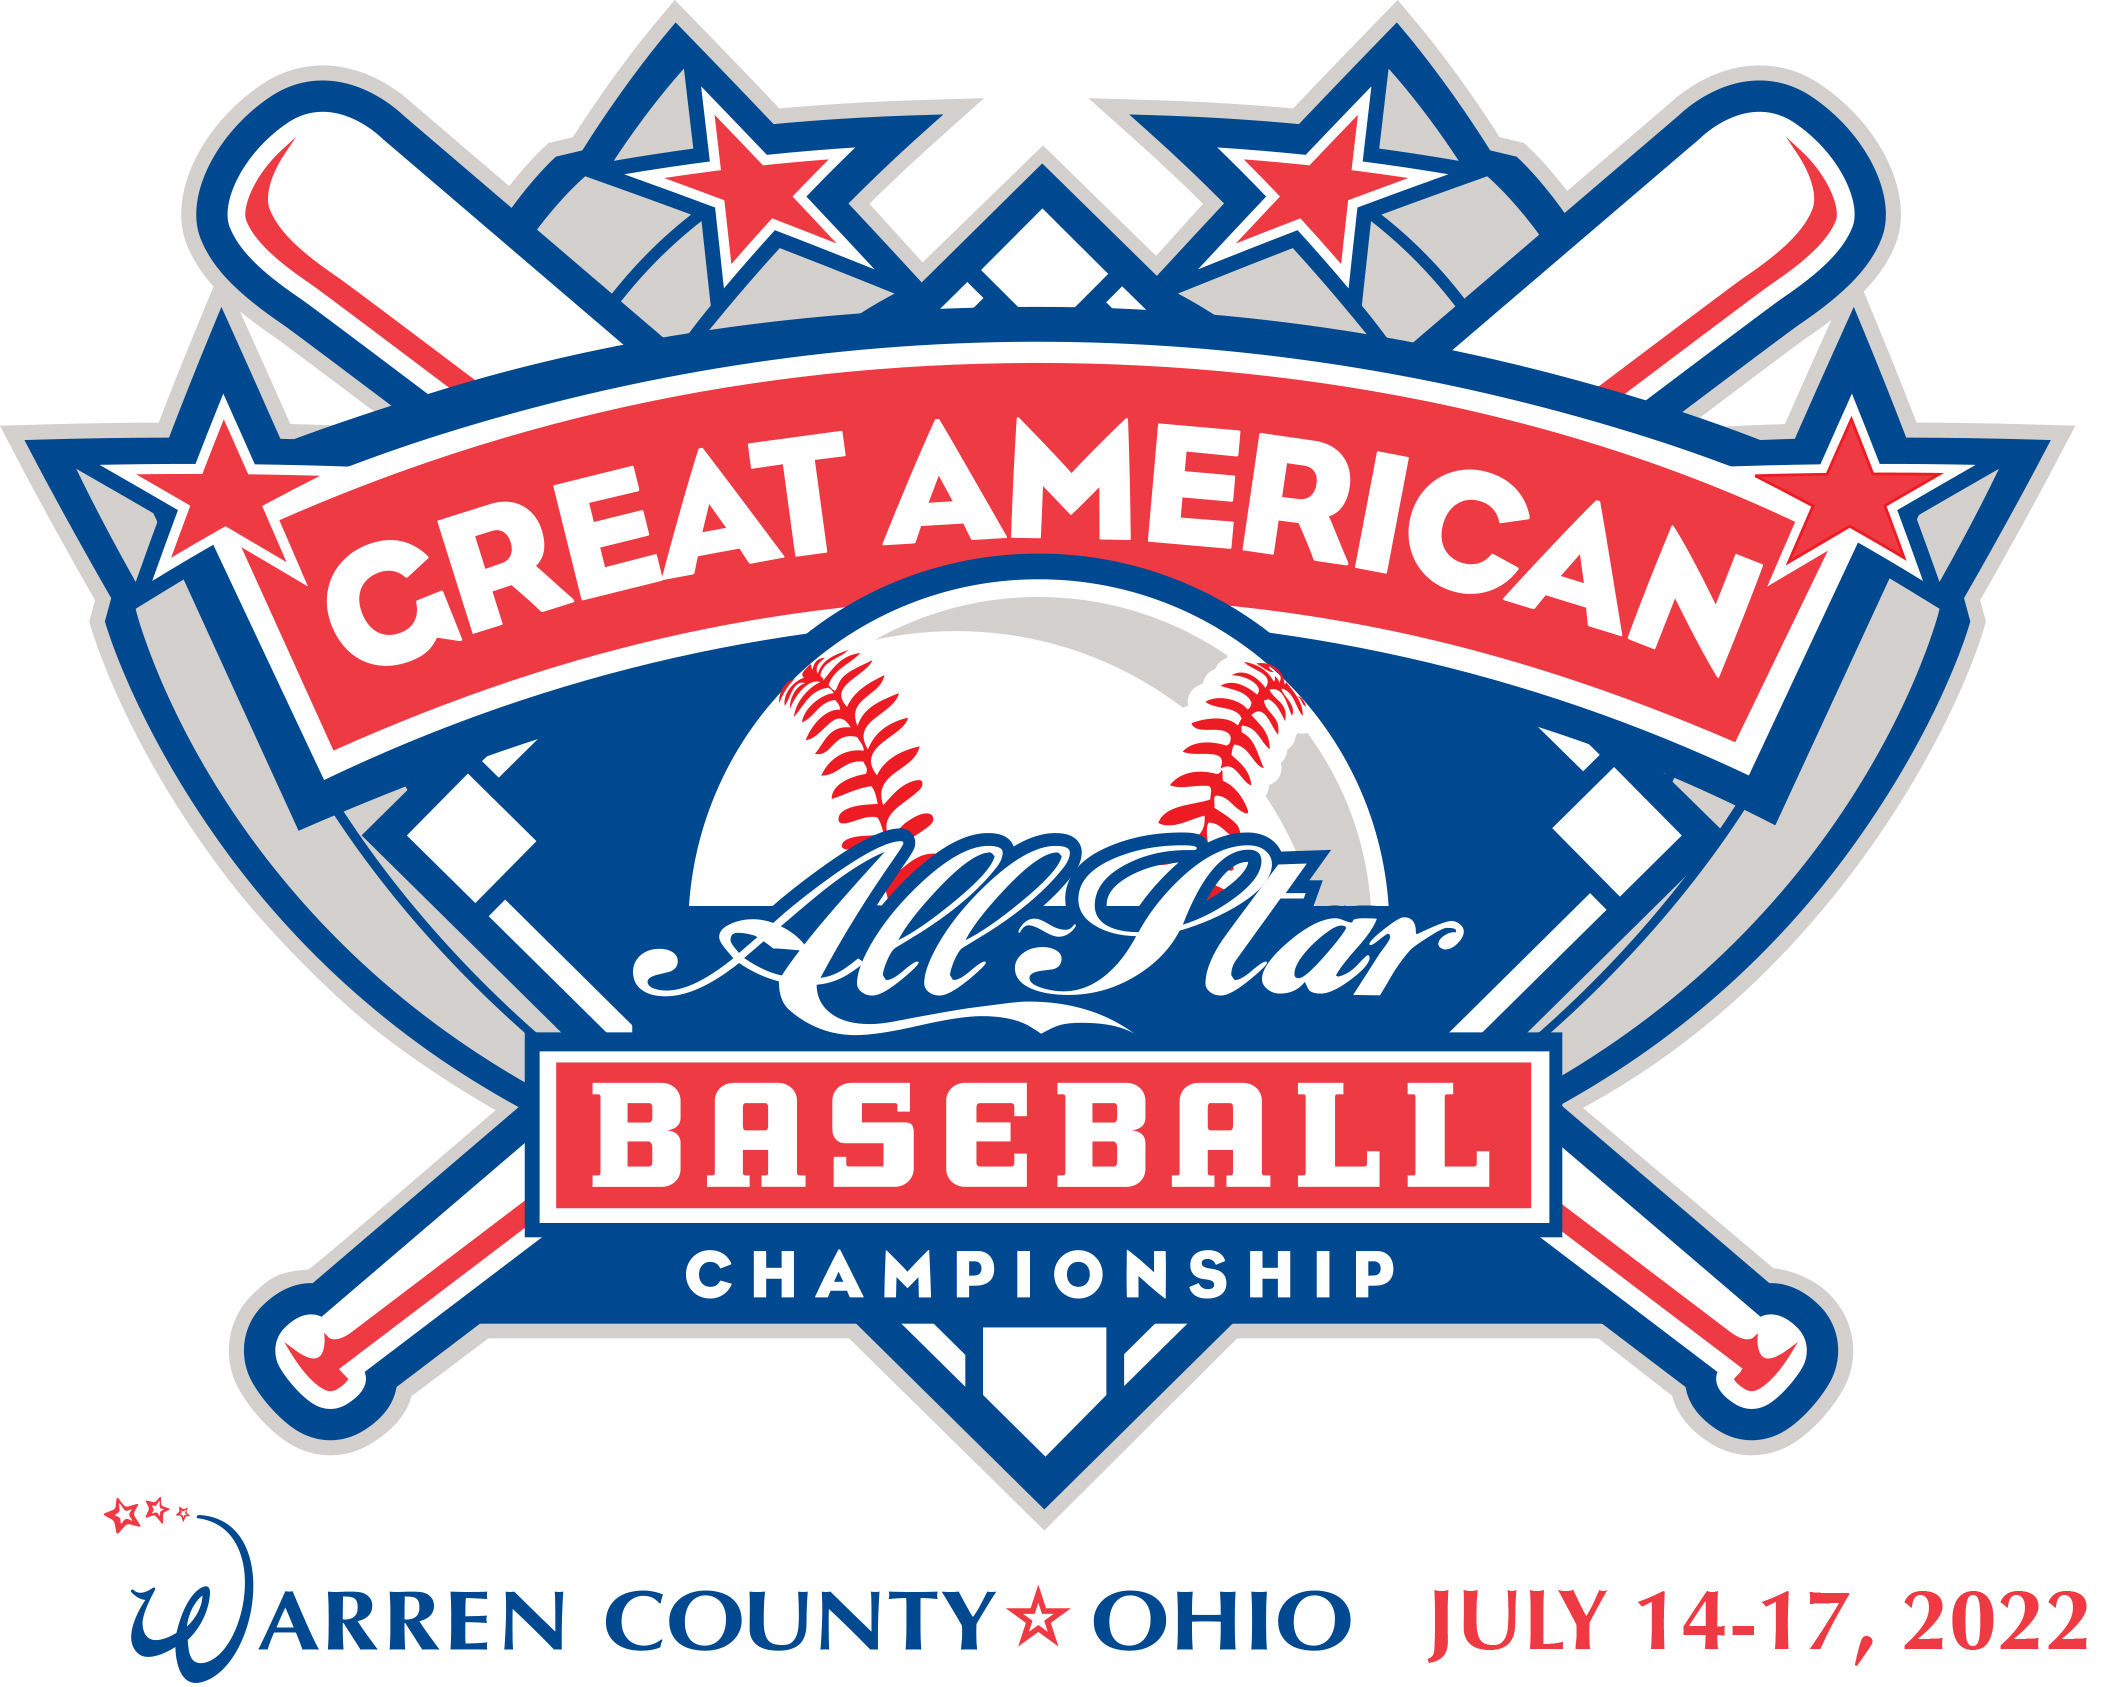 Great American All Star Championship (11u, 12u, 13u, 14u) – Cincinnati